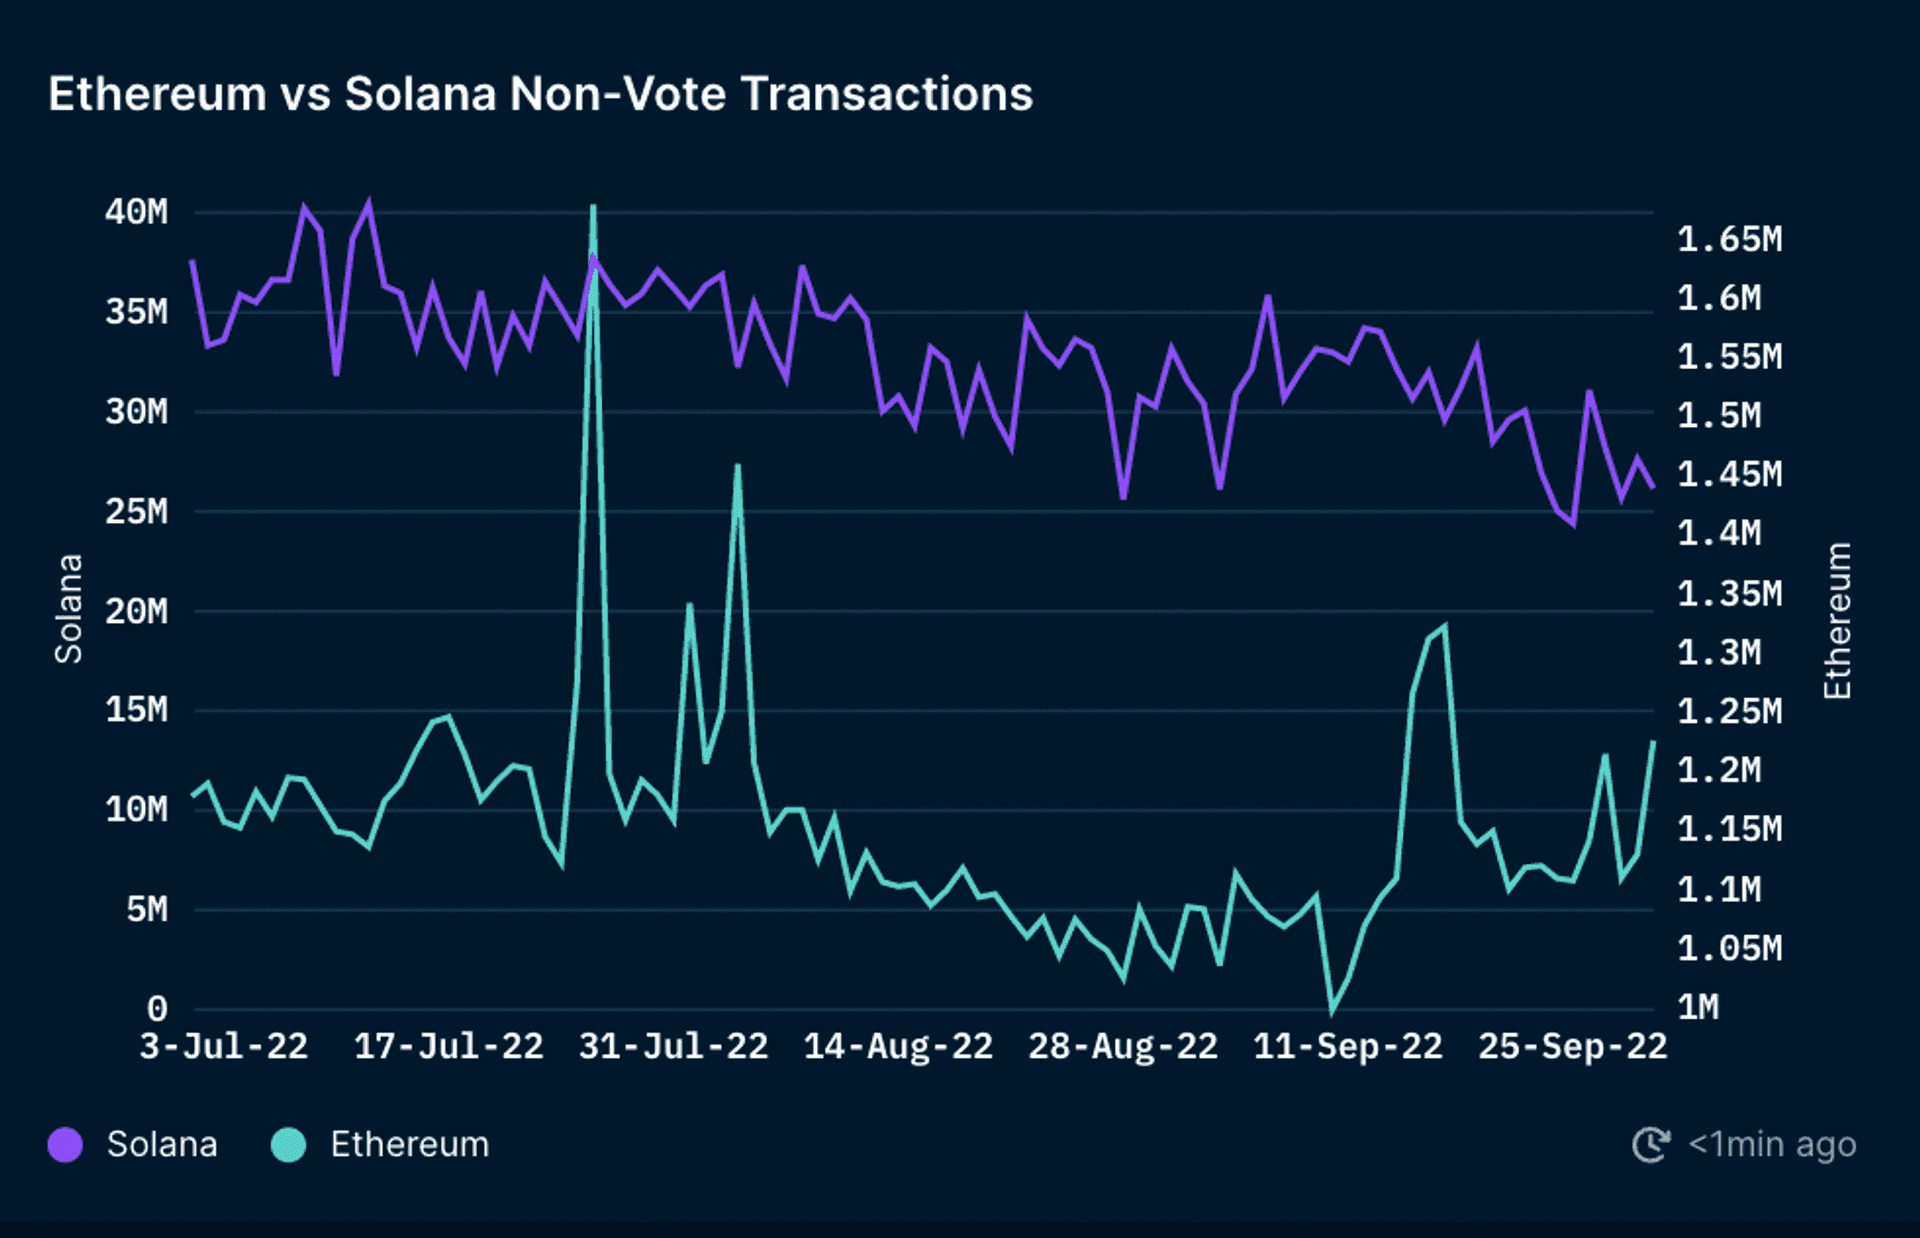 Daily Transactions on Ethereum vs Solana